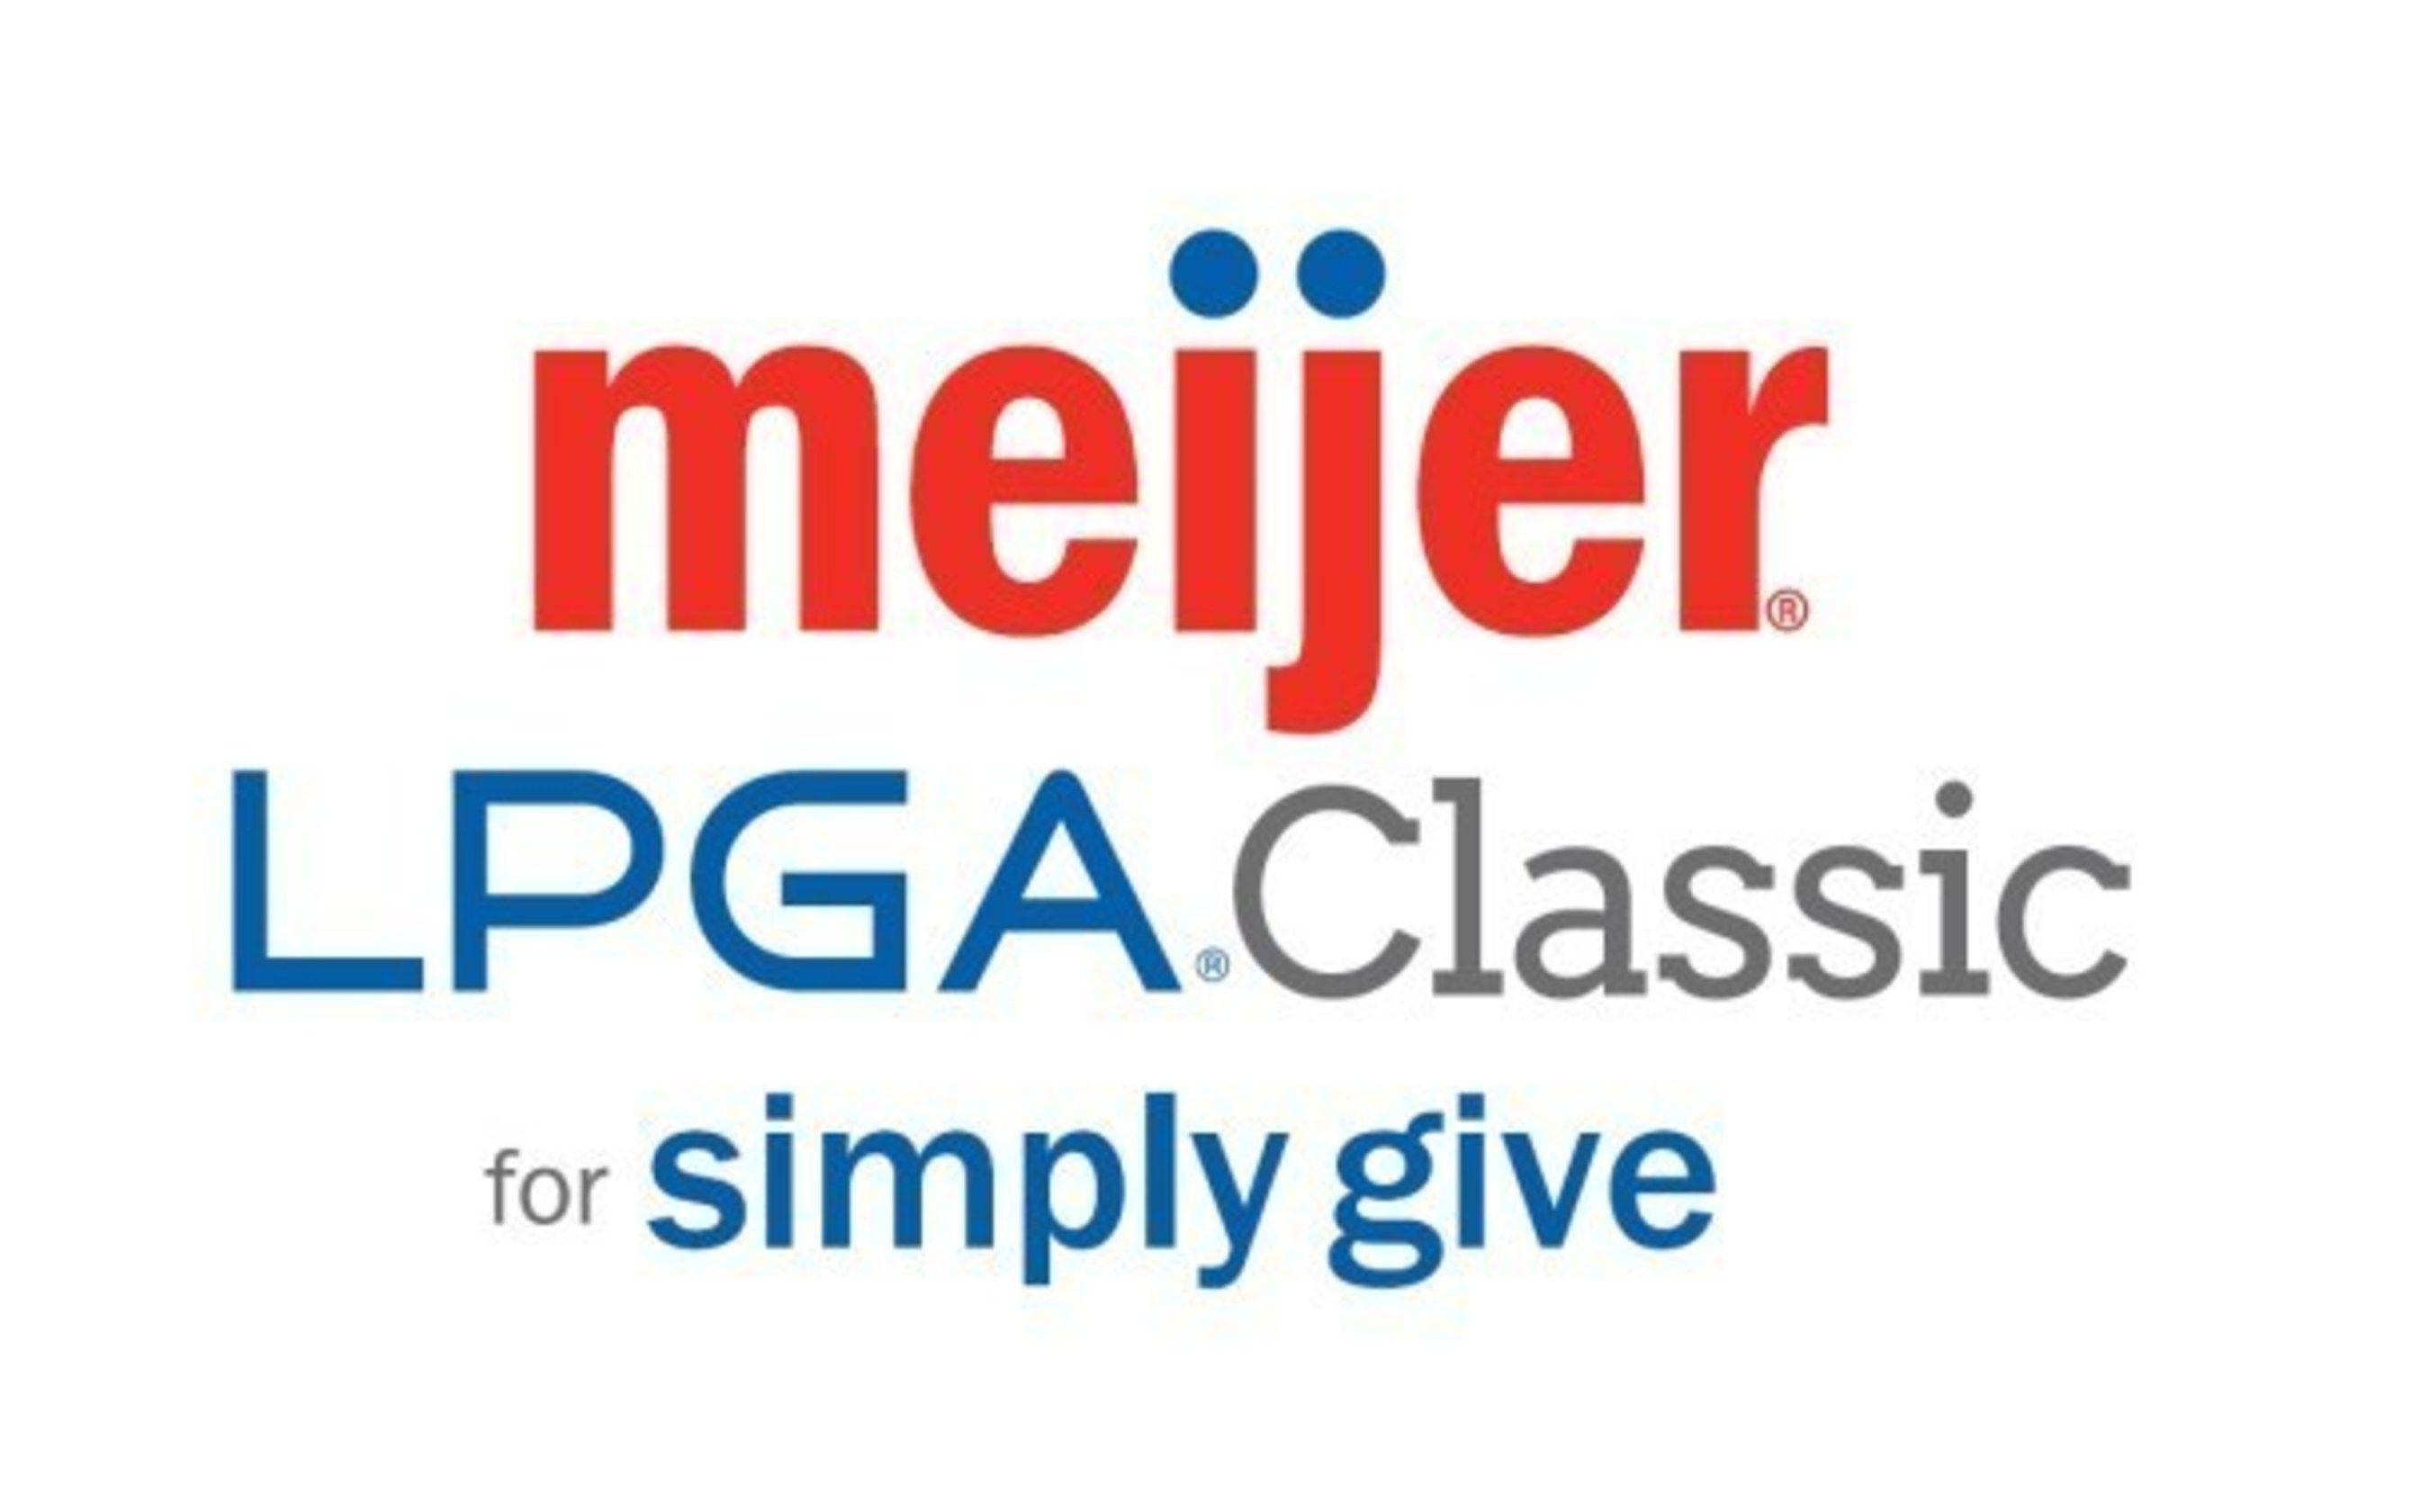 Food Max Red Blue Logo - Grand Taste at the Meijer LPGA Classic Announces Full Partnership